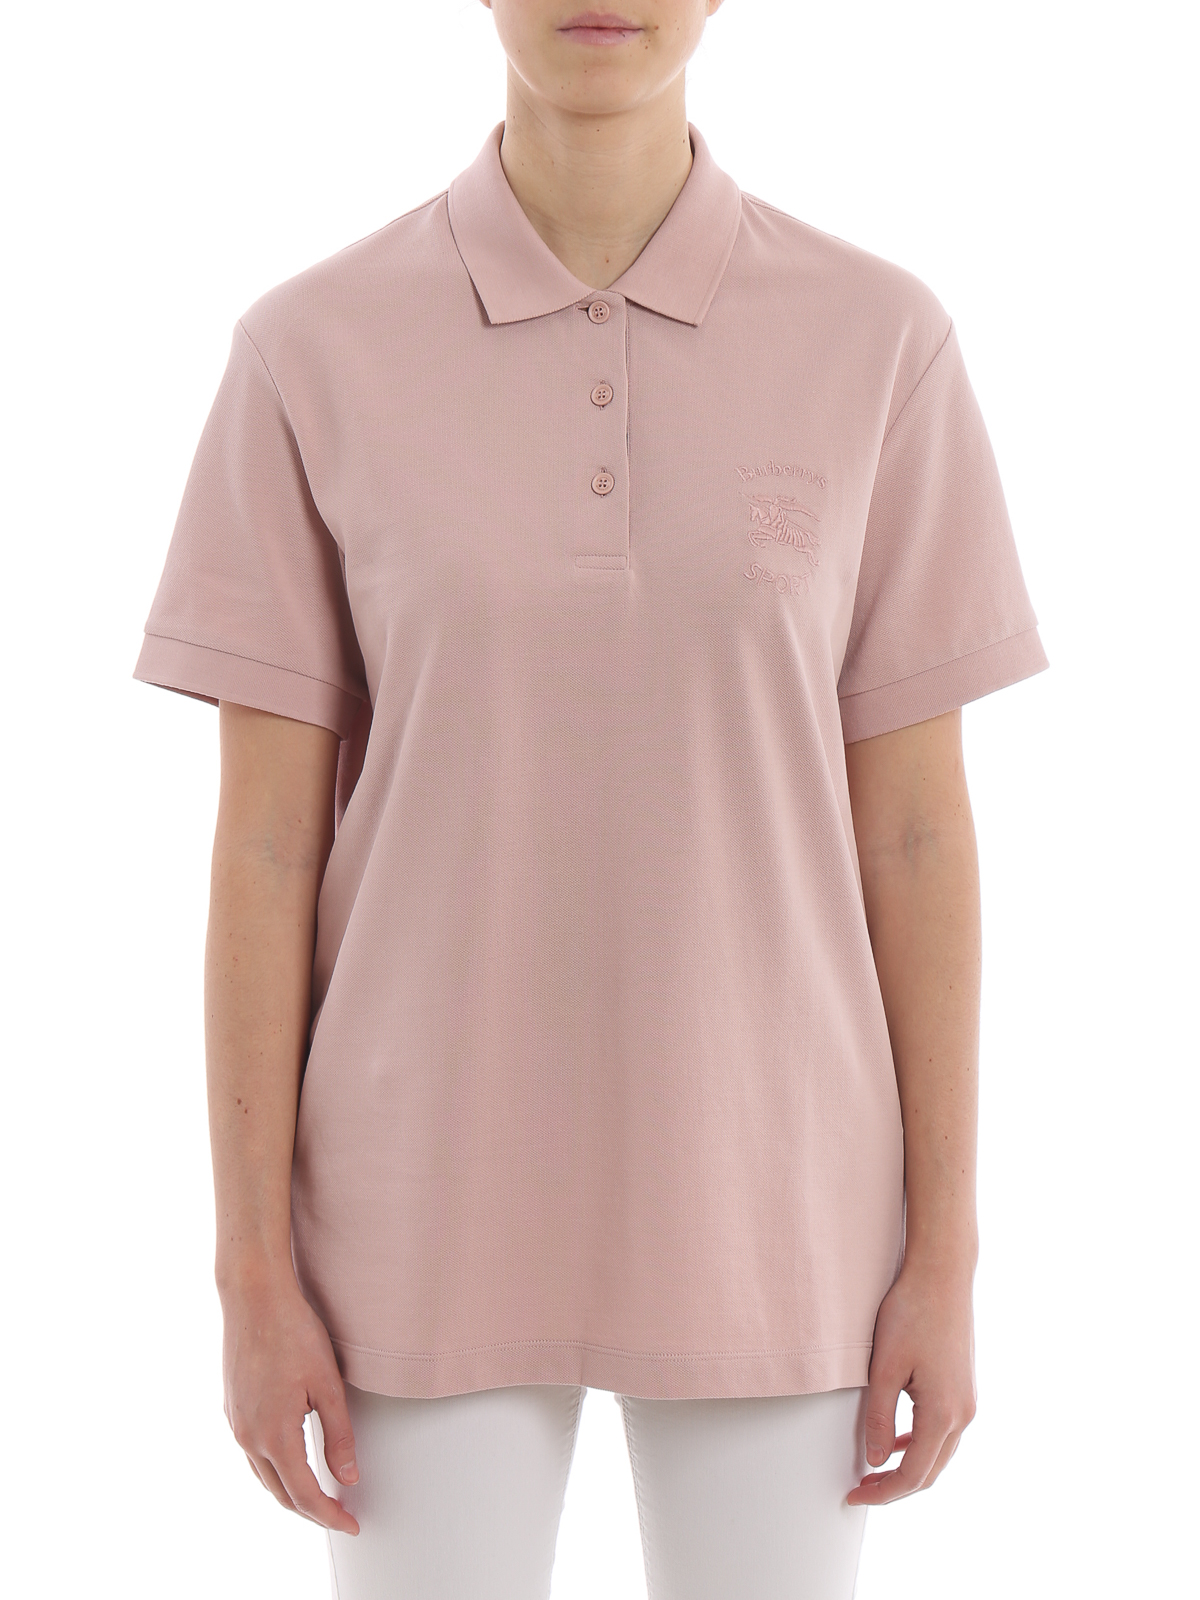 Mark Transcend prangende Polo shirts Burberry - Hartford pink polo shirt - 8002925 | iKRIX.com